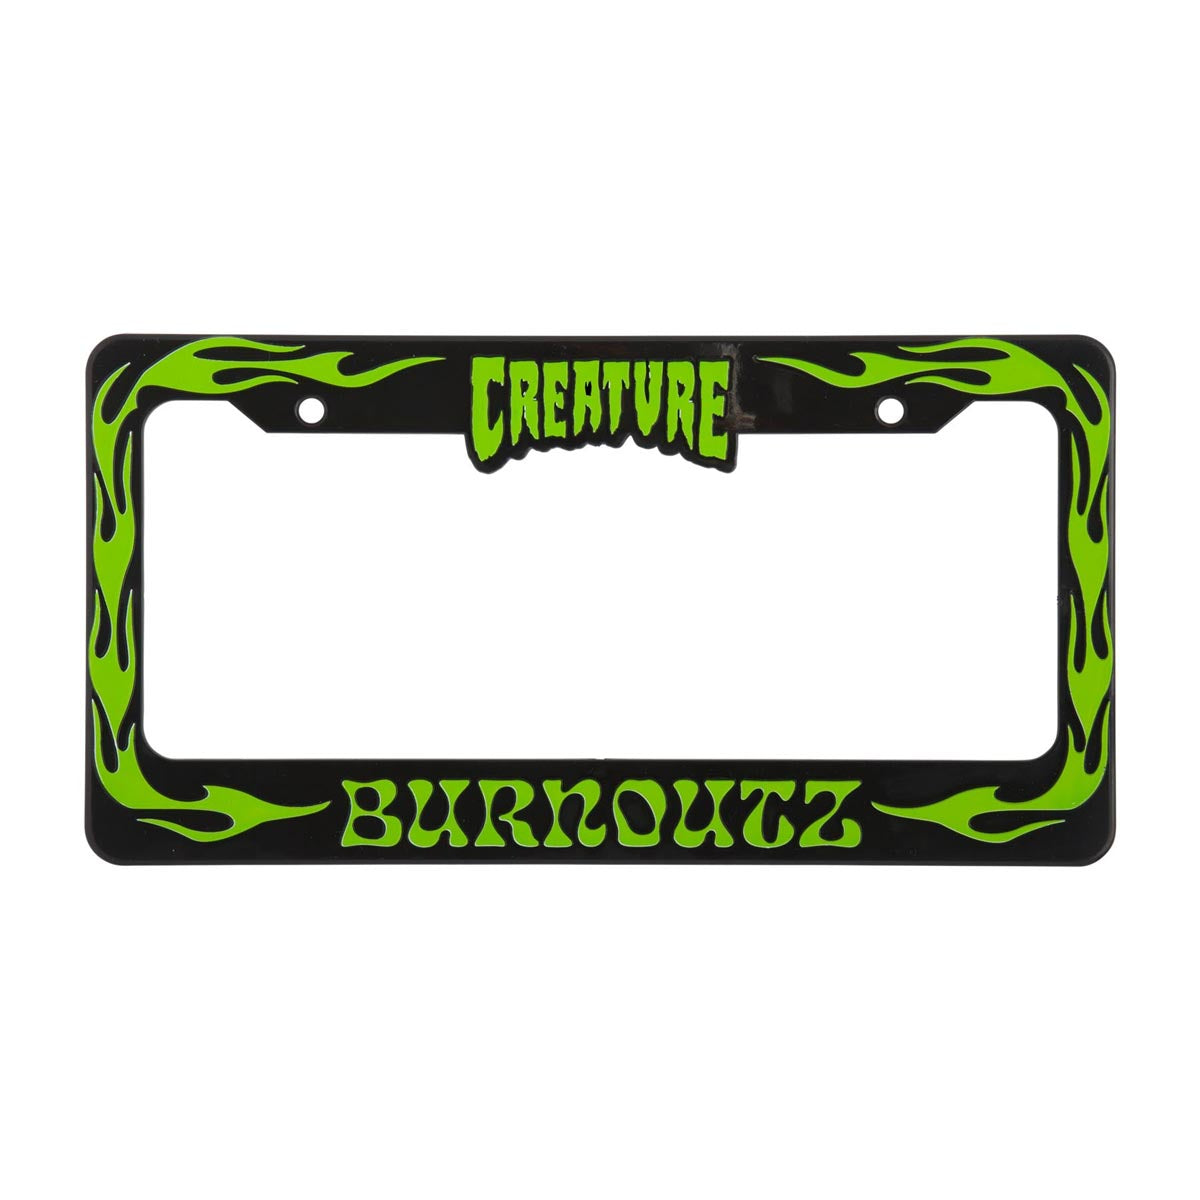 Creature Burnoutz License Plate Frame - Black/Green image 1